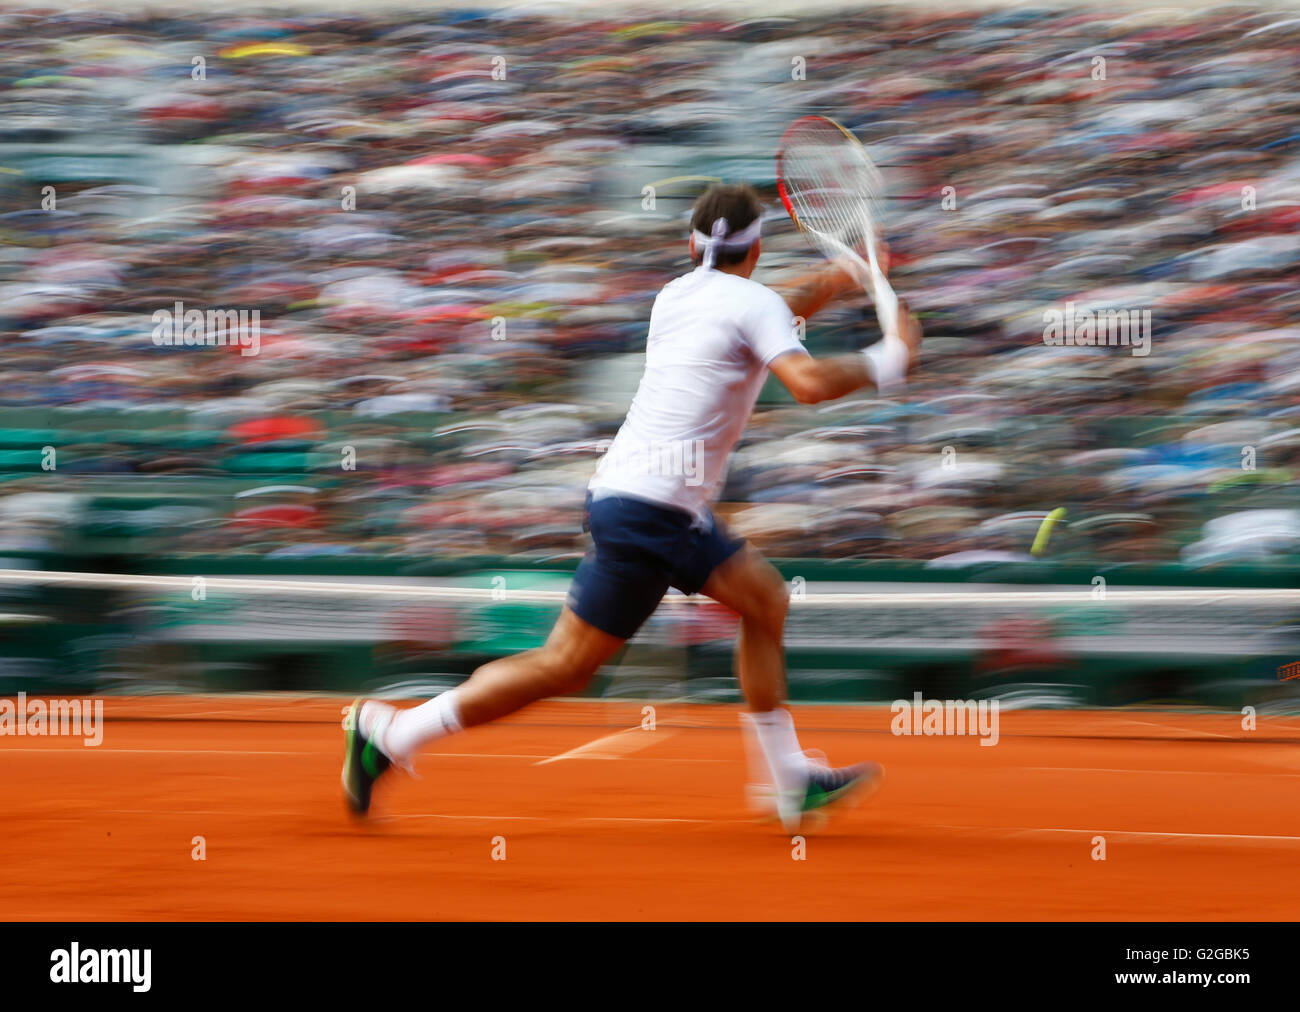 Roger Federer, Sui, French Open 2013, Torneo de Tenis ITF Grand Slam, Roland Garros, Roland Garros Stadion, París Foto de stock